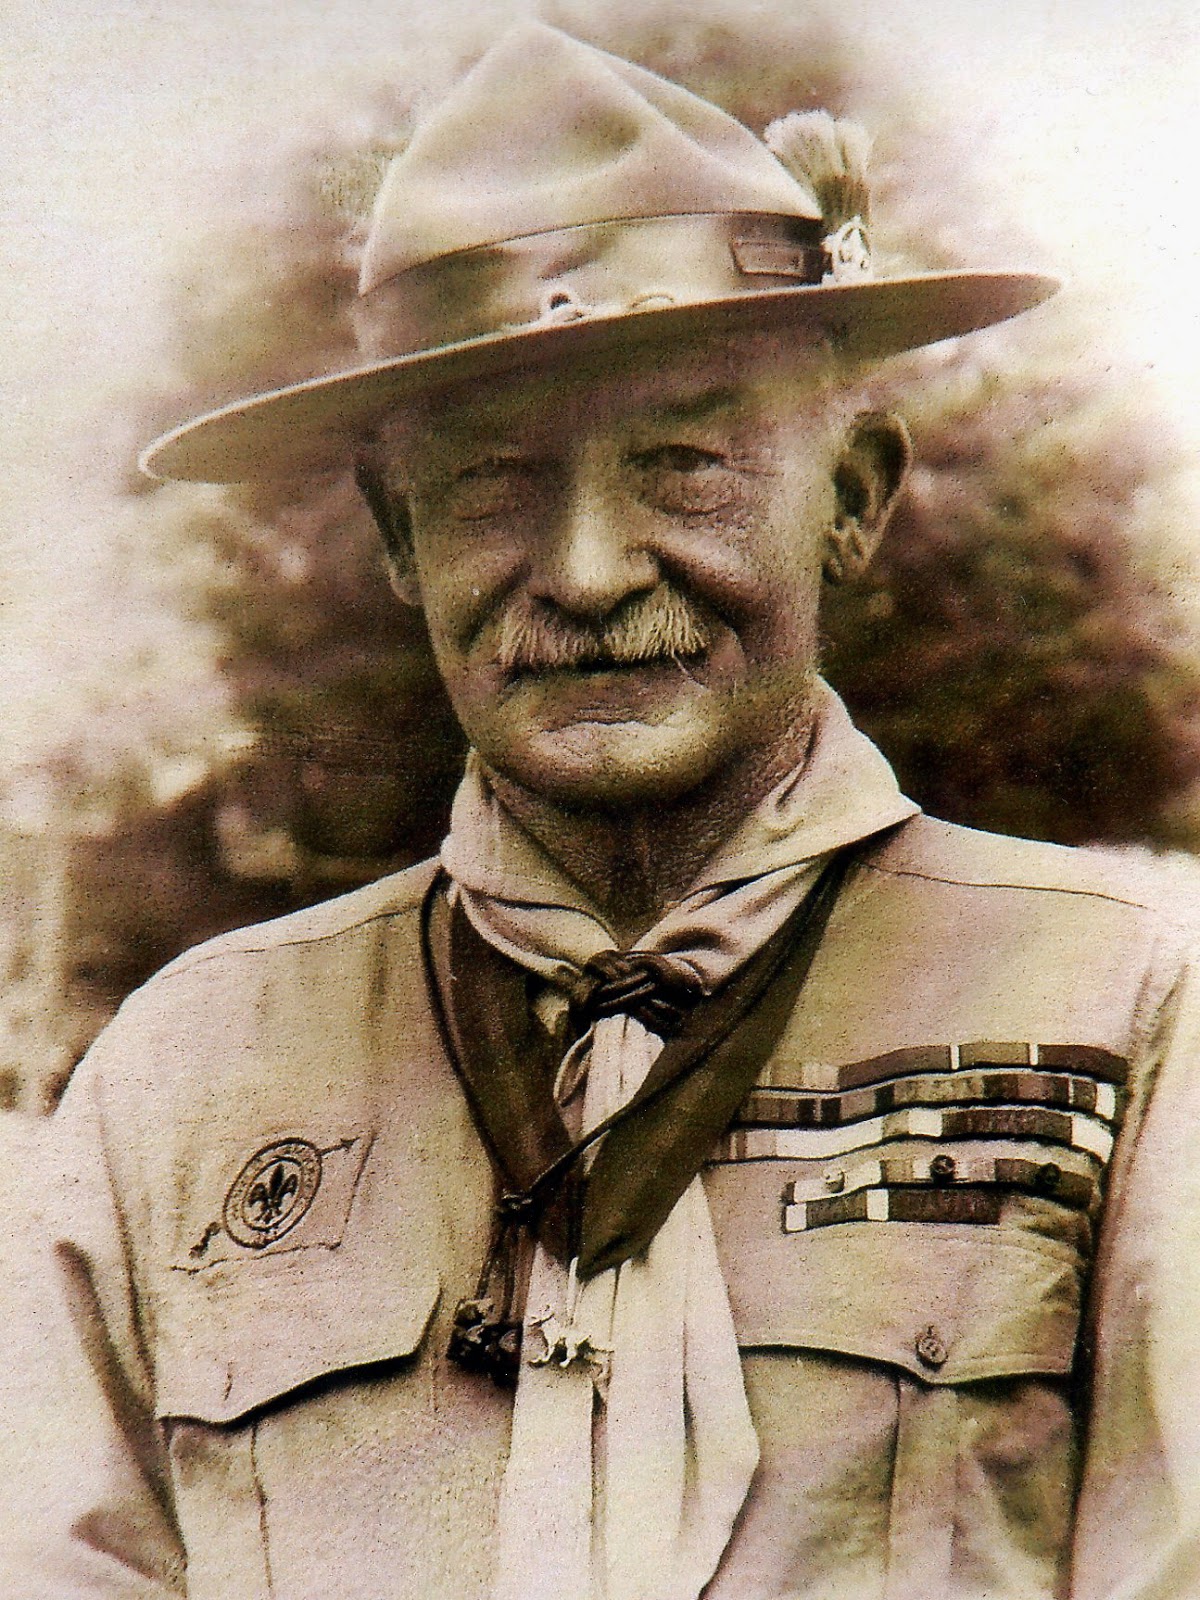 Sejarah Dan Biodata Bapak Pandu Sedunia Baden Powell Materi Belajar Aprelryu